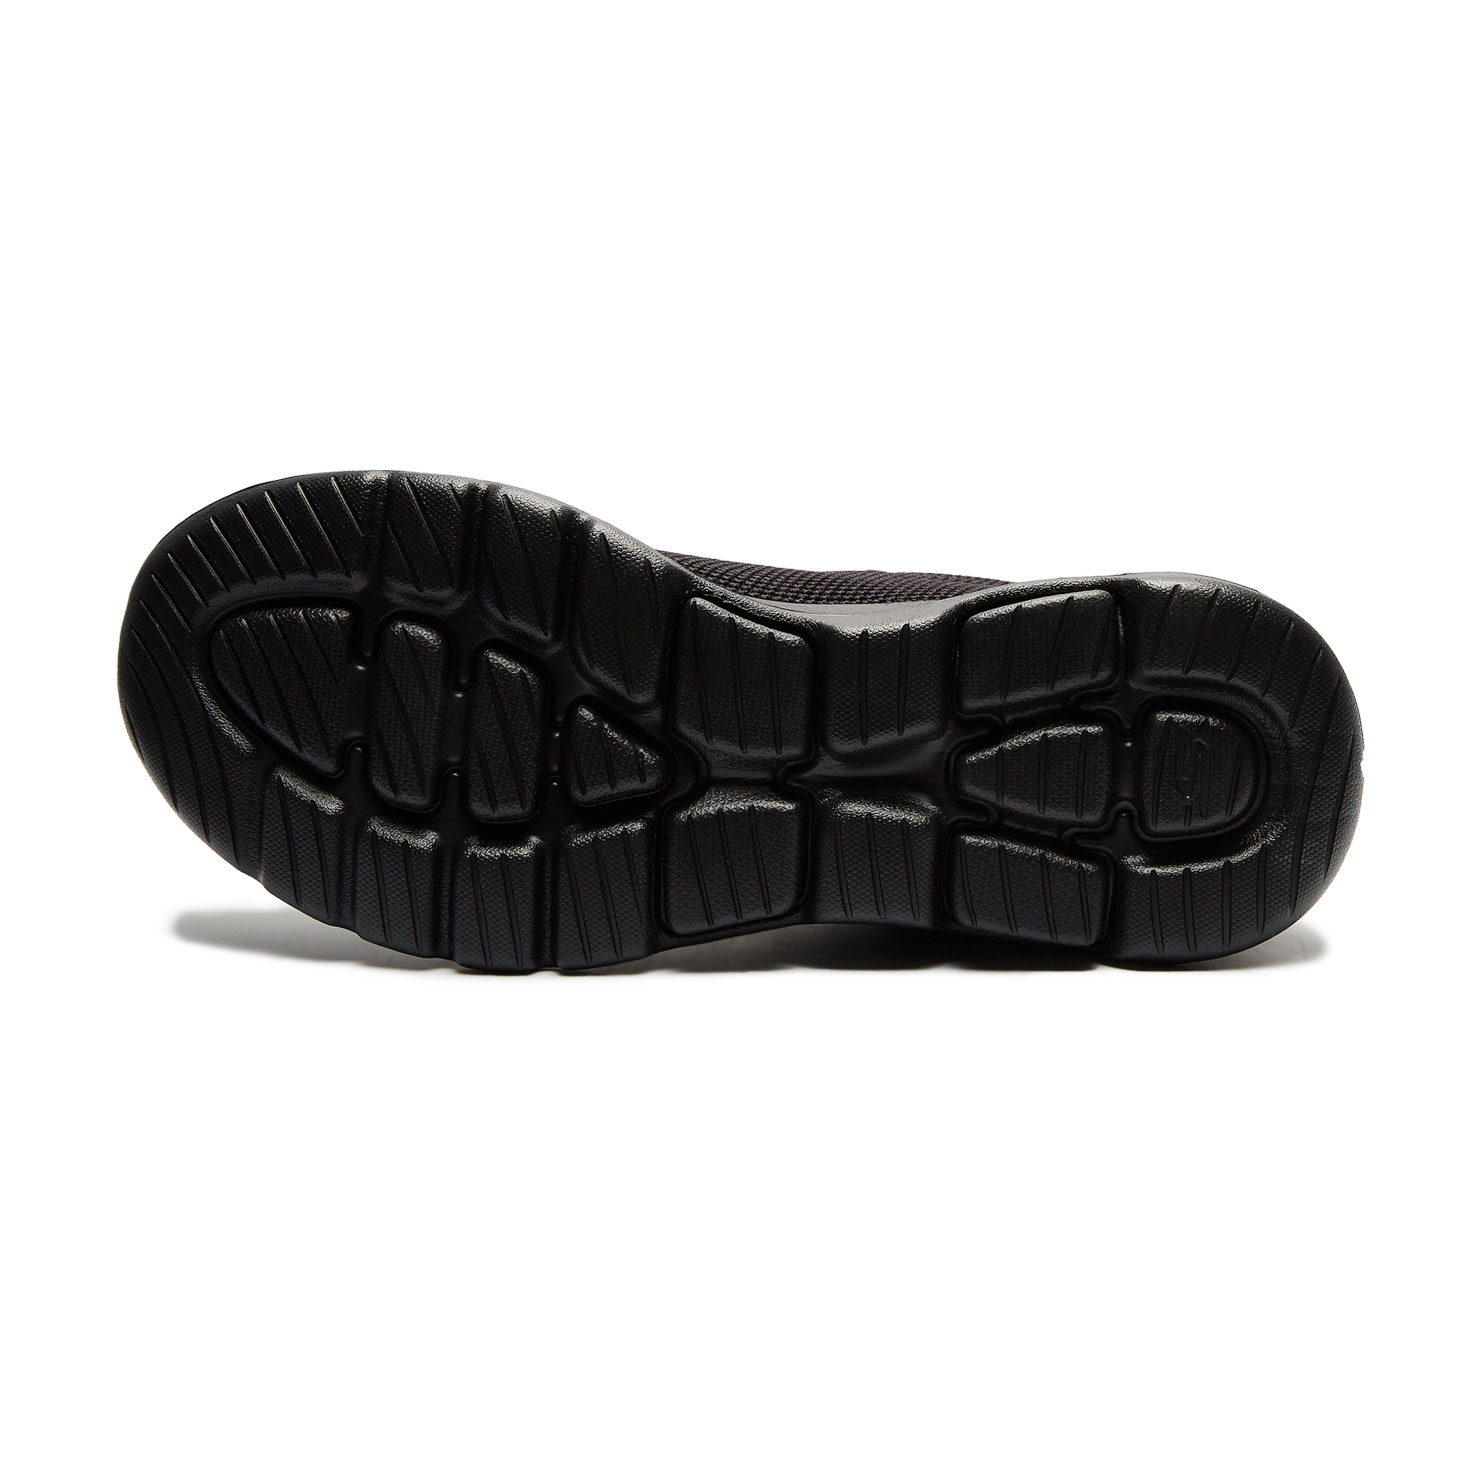 Men's low shoes SKECHERS, размер 40, цвет черный SK55519 - фото 6